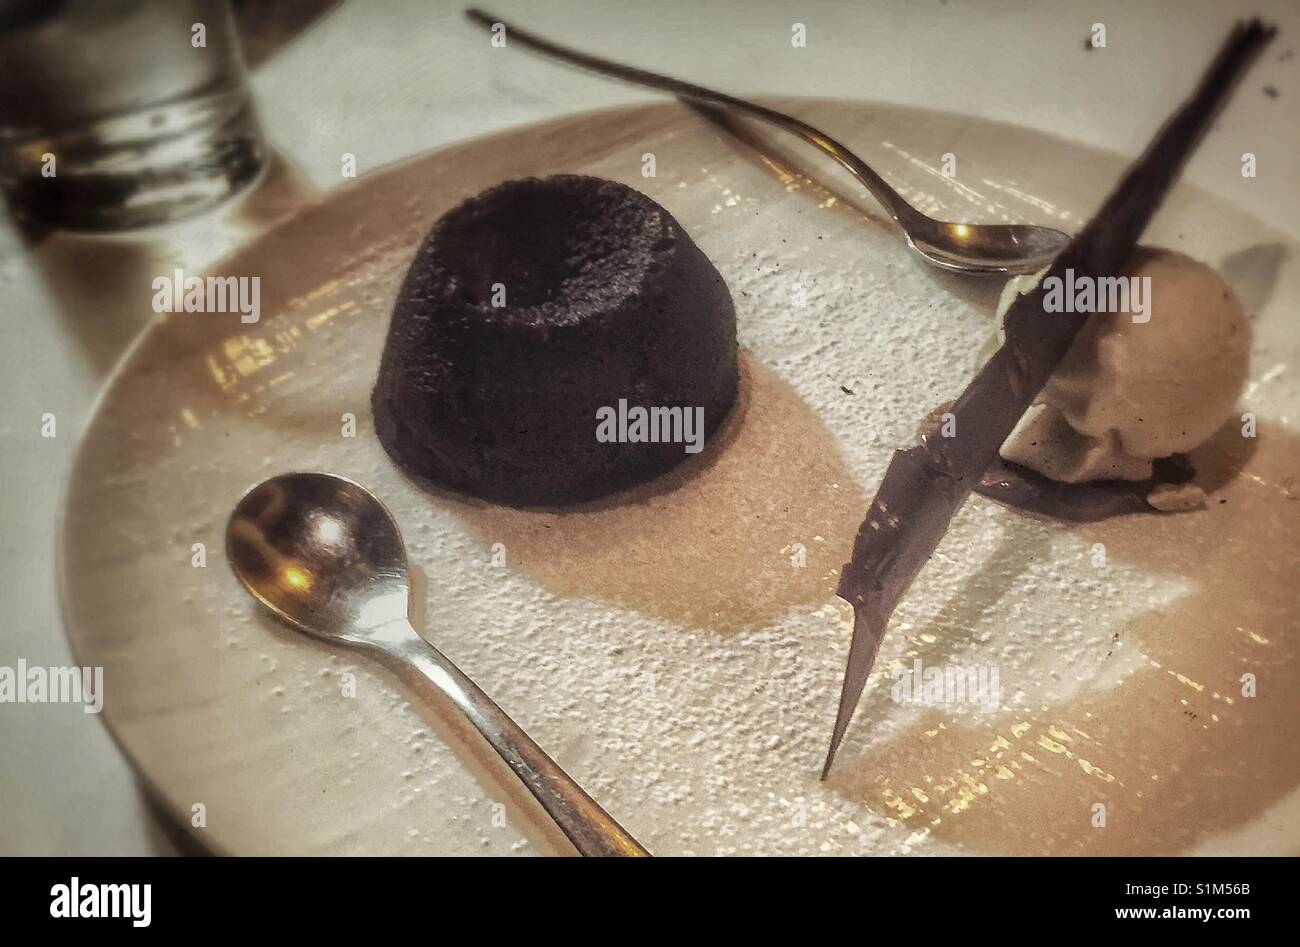 An elegant chocolate bomb dessert. Stock Photo